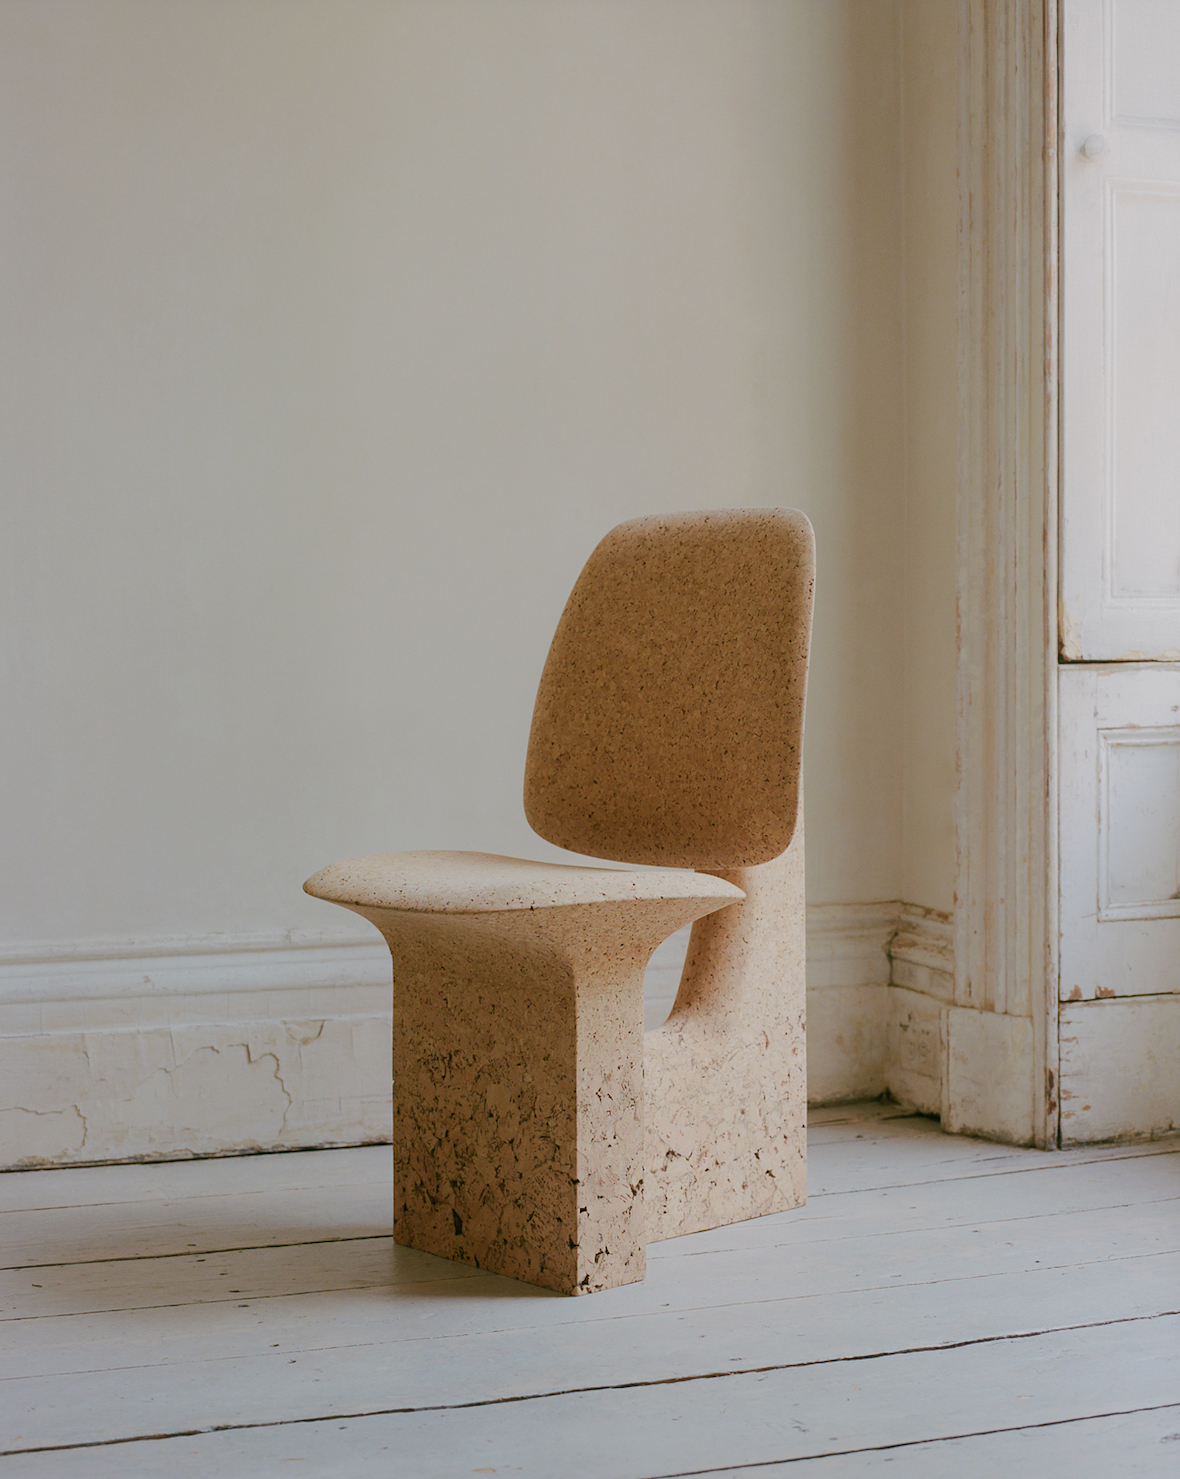 Demisch Danant Presents ‘Made in Situ’ Exploring Cork + Ceramics